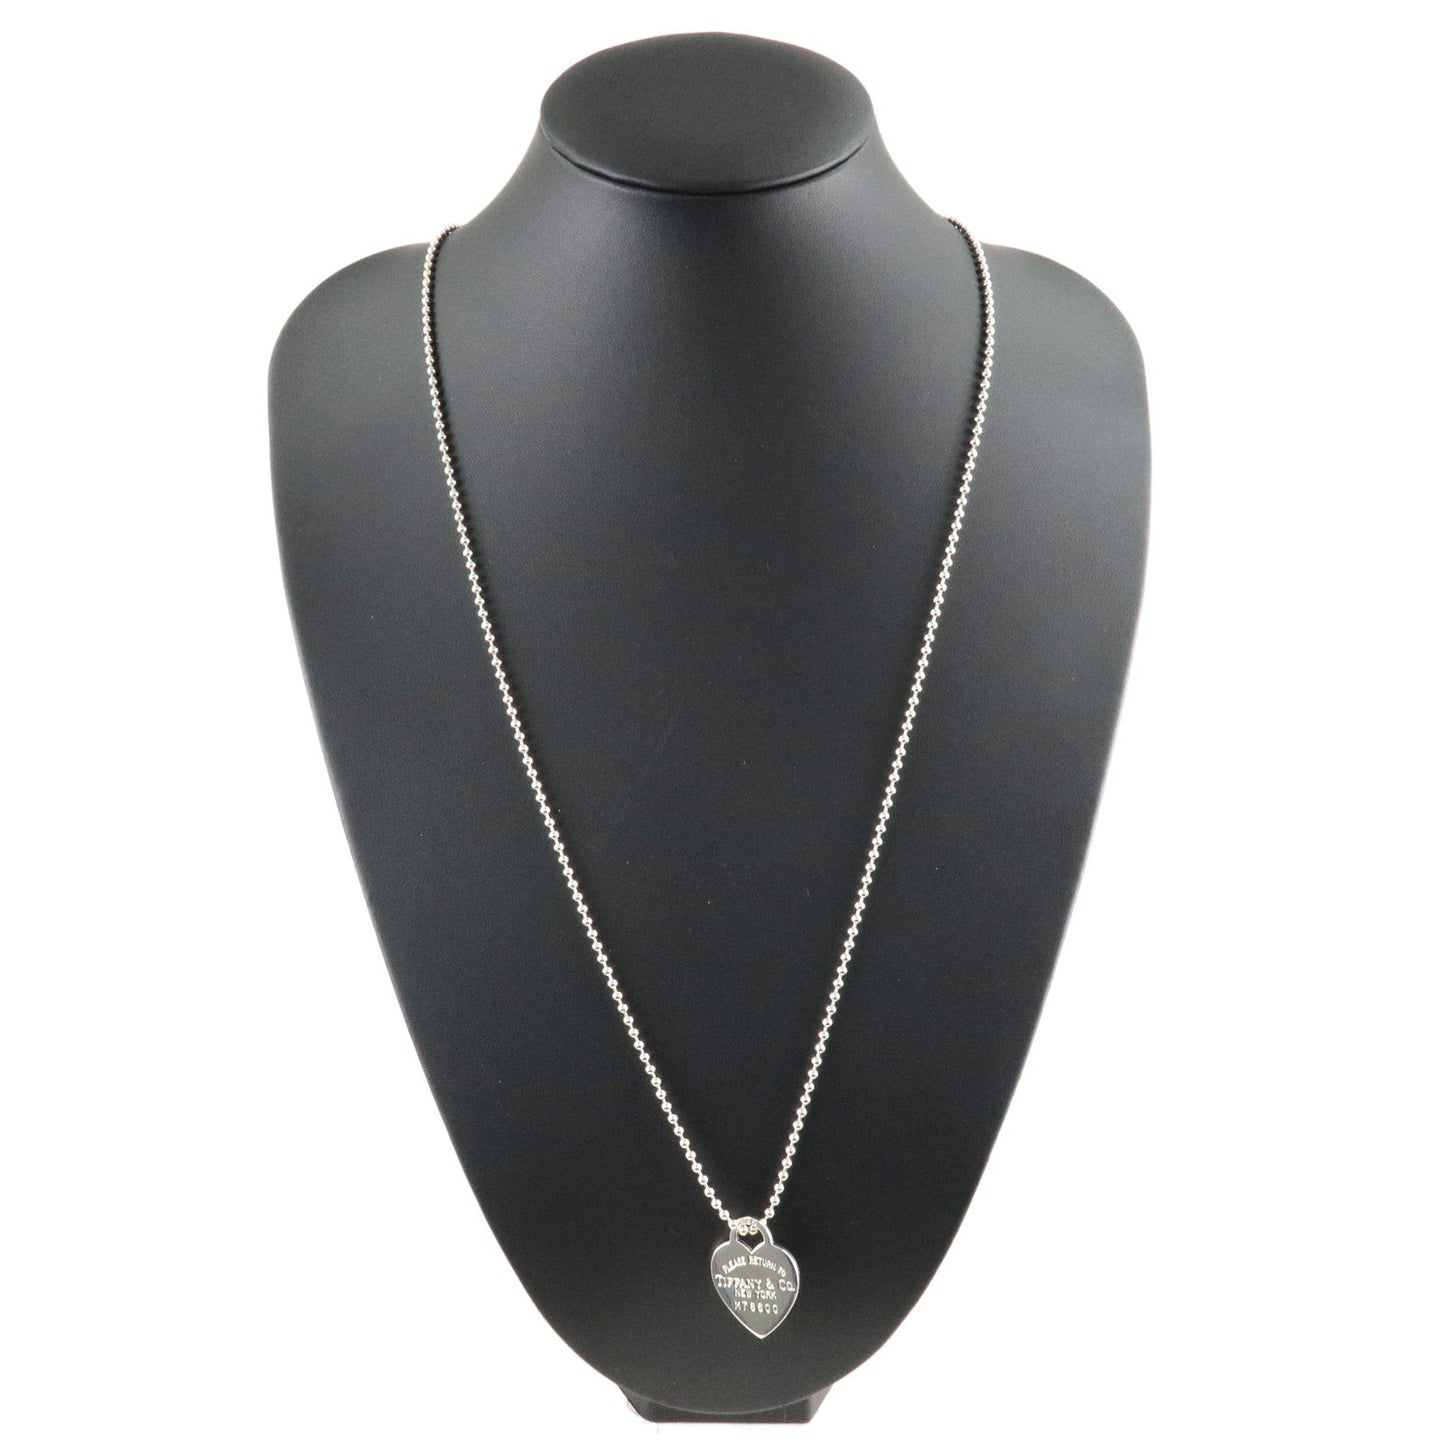 Tiffany&Co. Return to Tiffany Heart Tag Necklace Silver 925